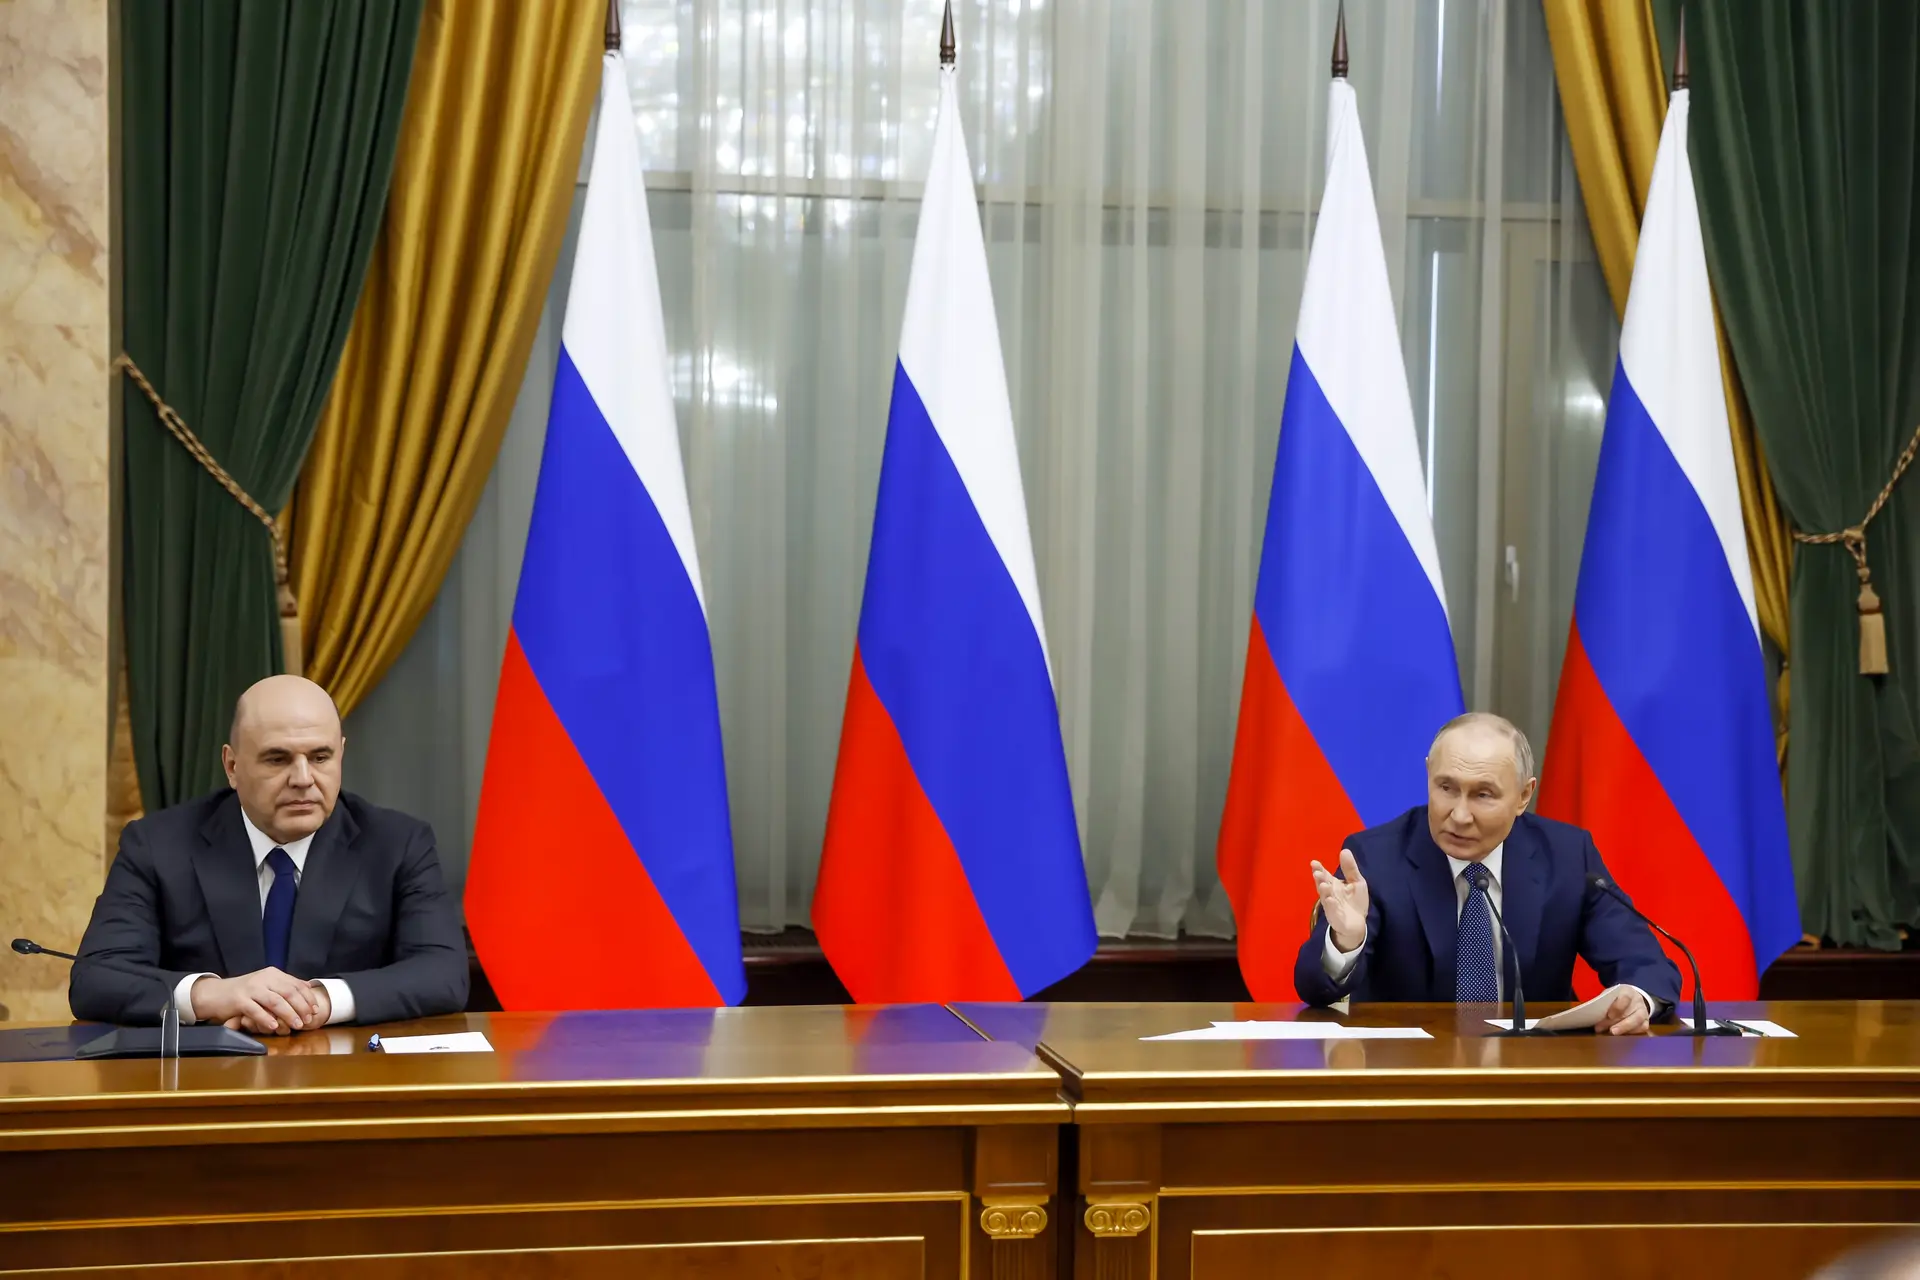 Putin reconduz Mishustin no cargo de primeiro-ministro da Rússia